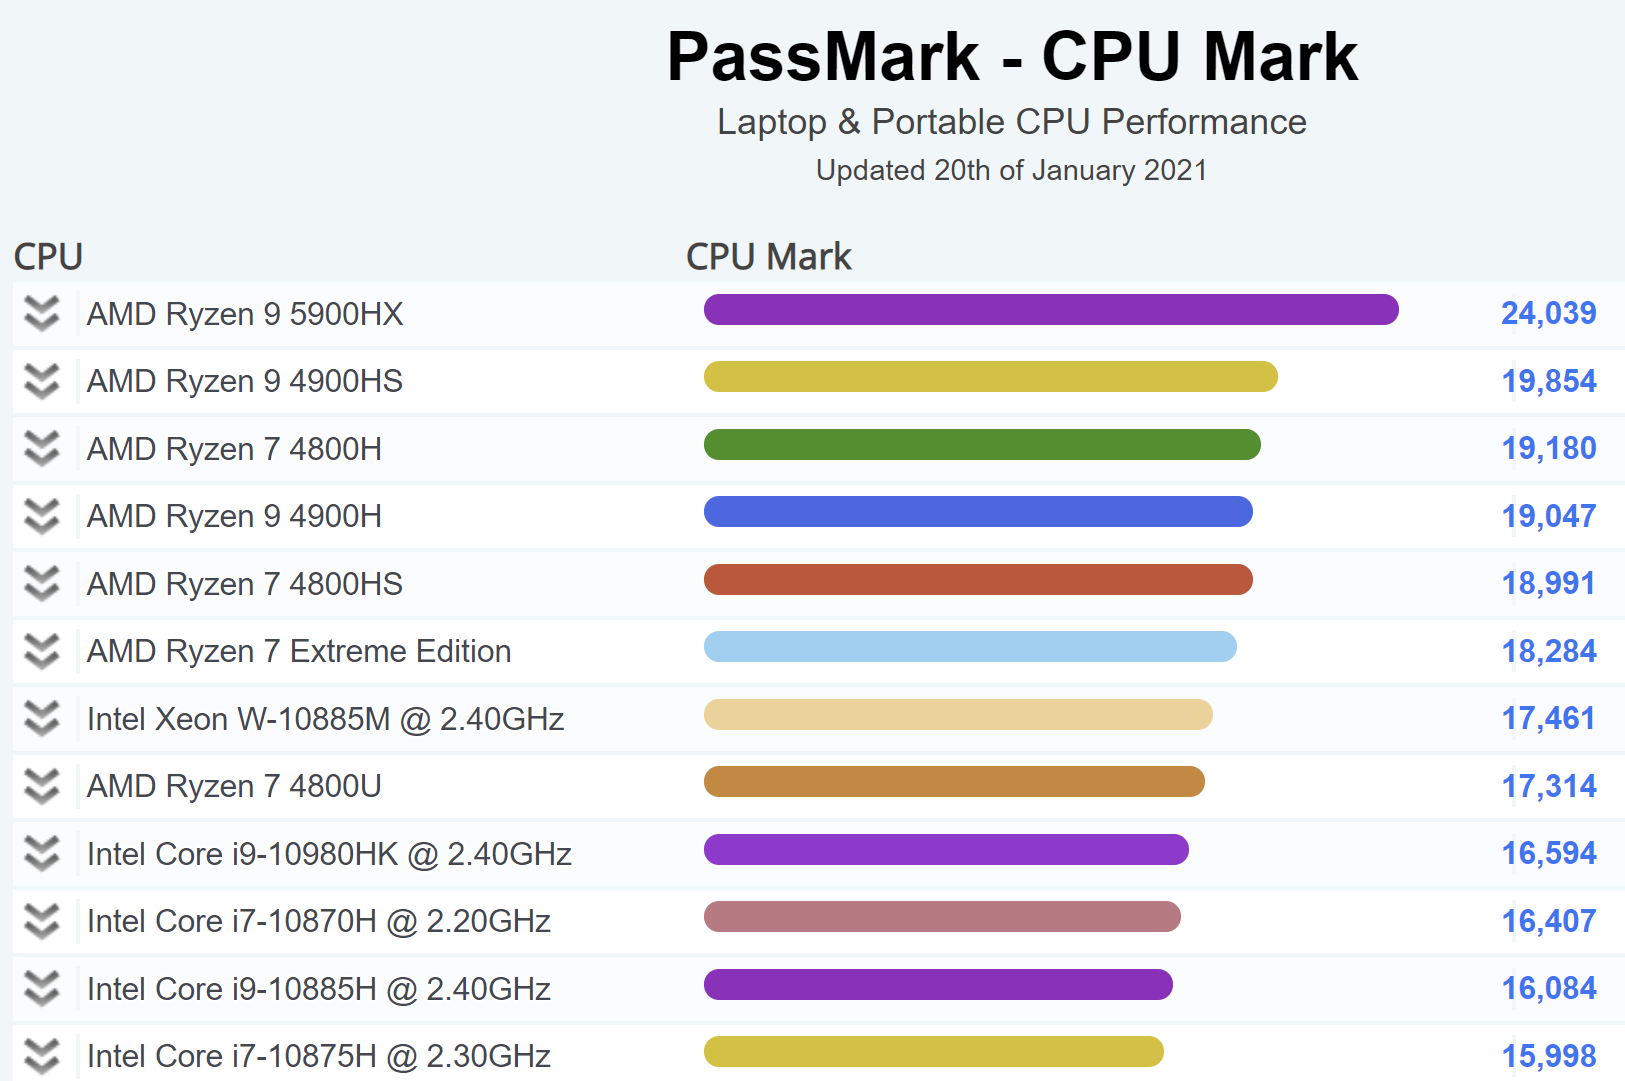 AMD Ryzen 9 5900HX is now PassMark's highest ranking mobile CPU